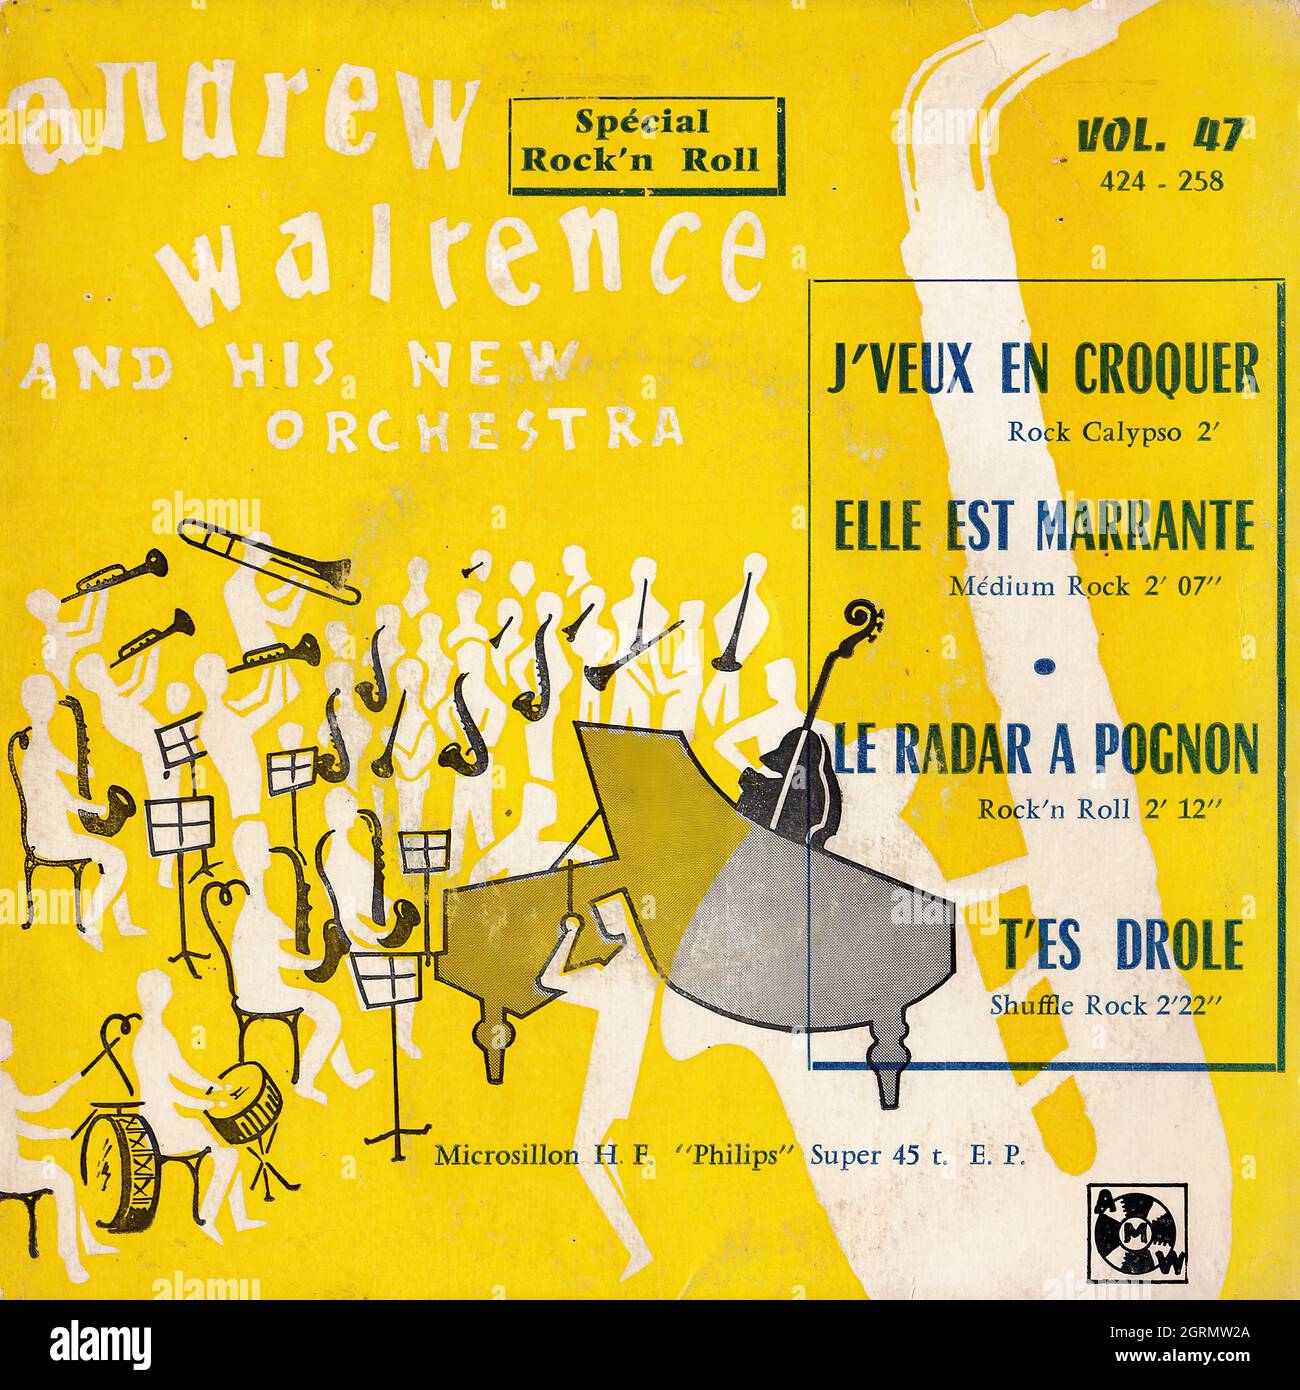 Andrew Walrence et son nouvel orchestre - Spécial Rock'n Roll EP - Vintage Vinyl Record Cover Banque D'Images